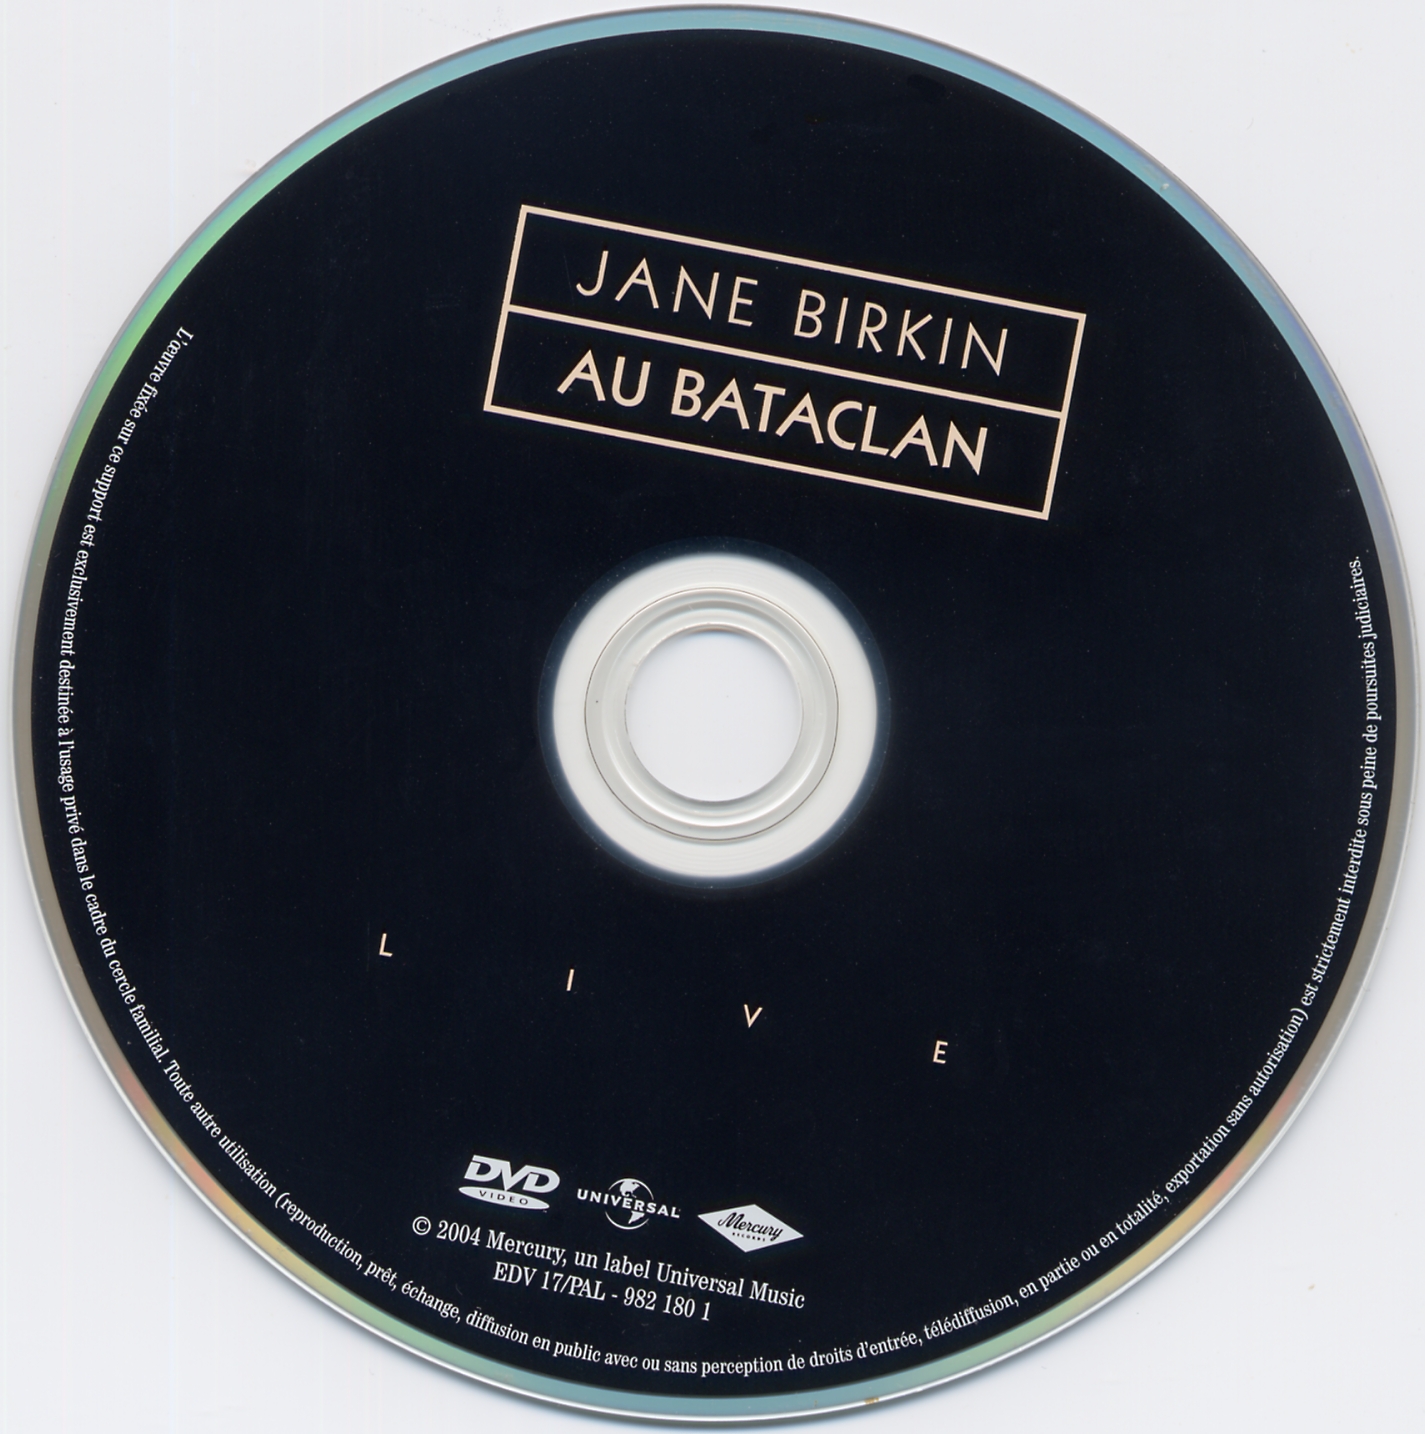 Jane Birkin au bataclan 1987